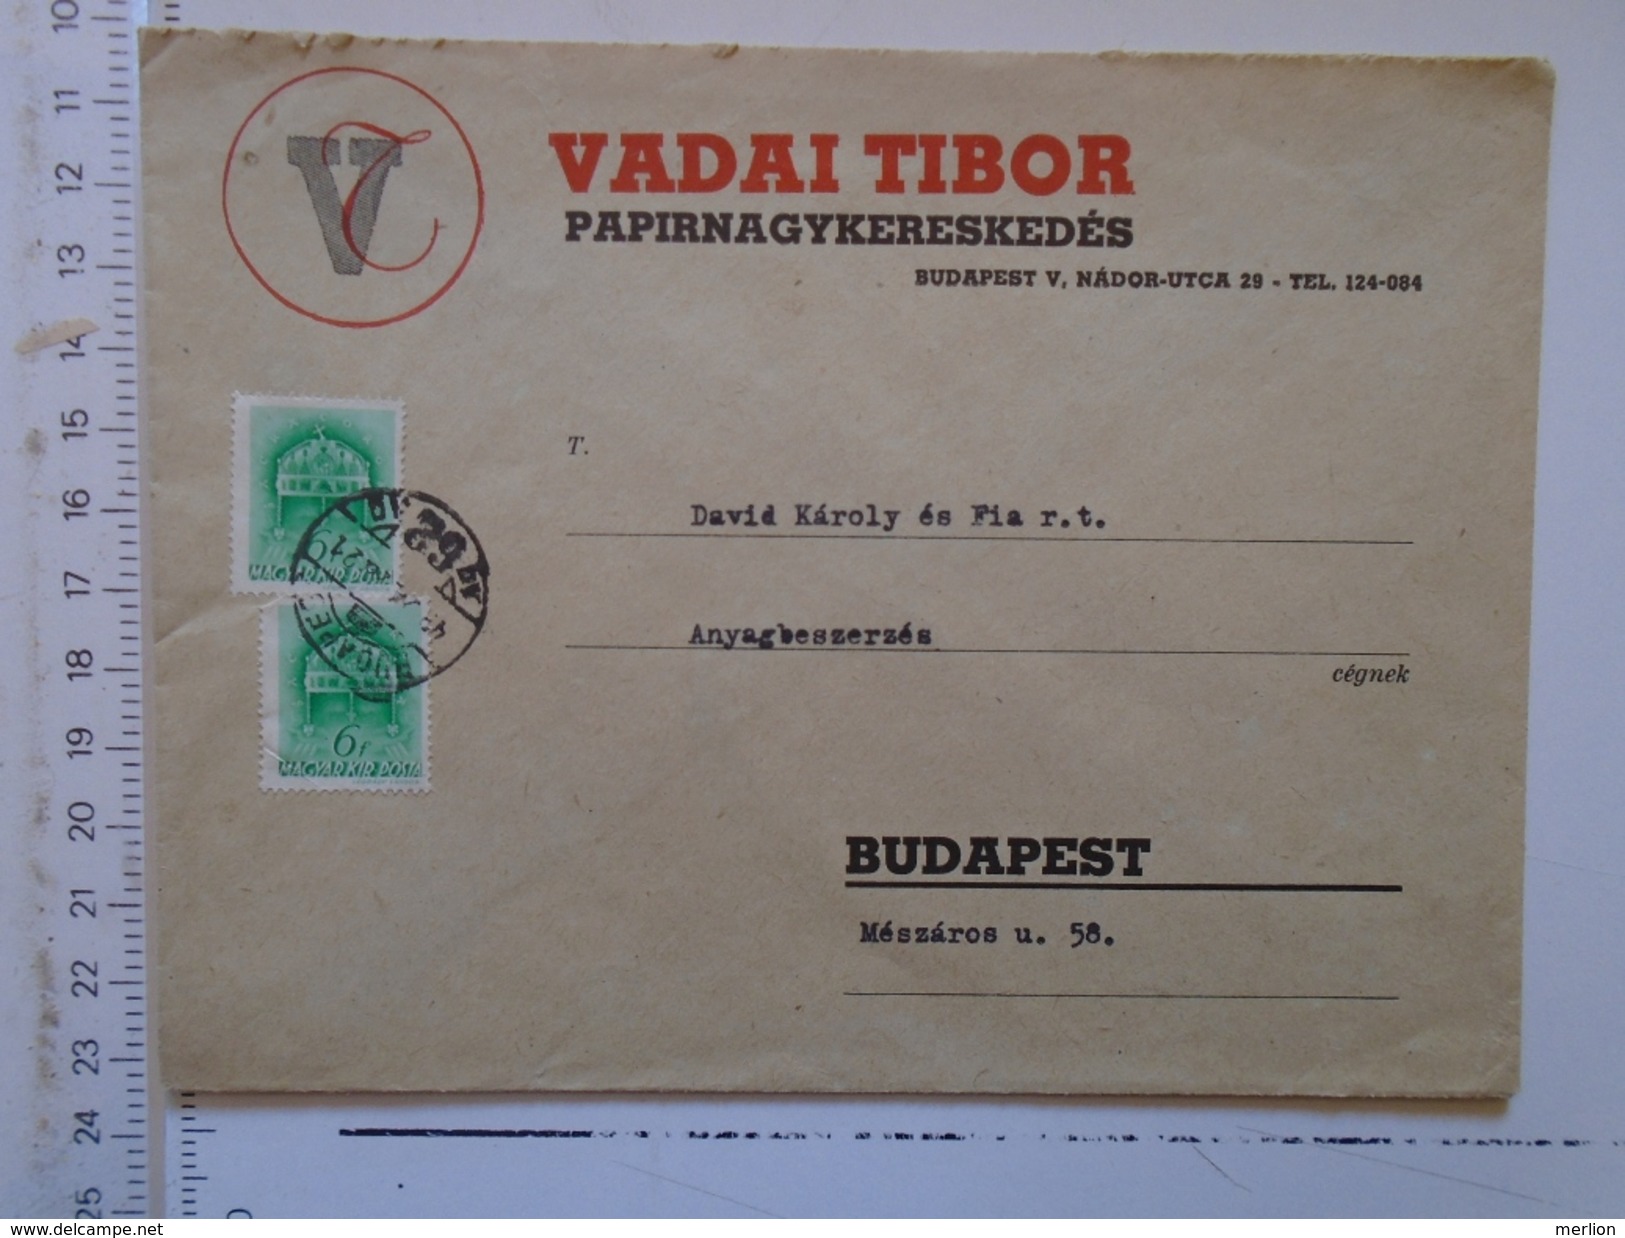 D149847 Hungary    Cover  - Vadai Tibor Papirnagykereskedés - Paper Wholesale - Budapest  1942 - Covers & Documents